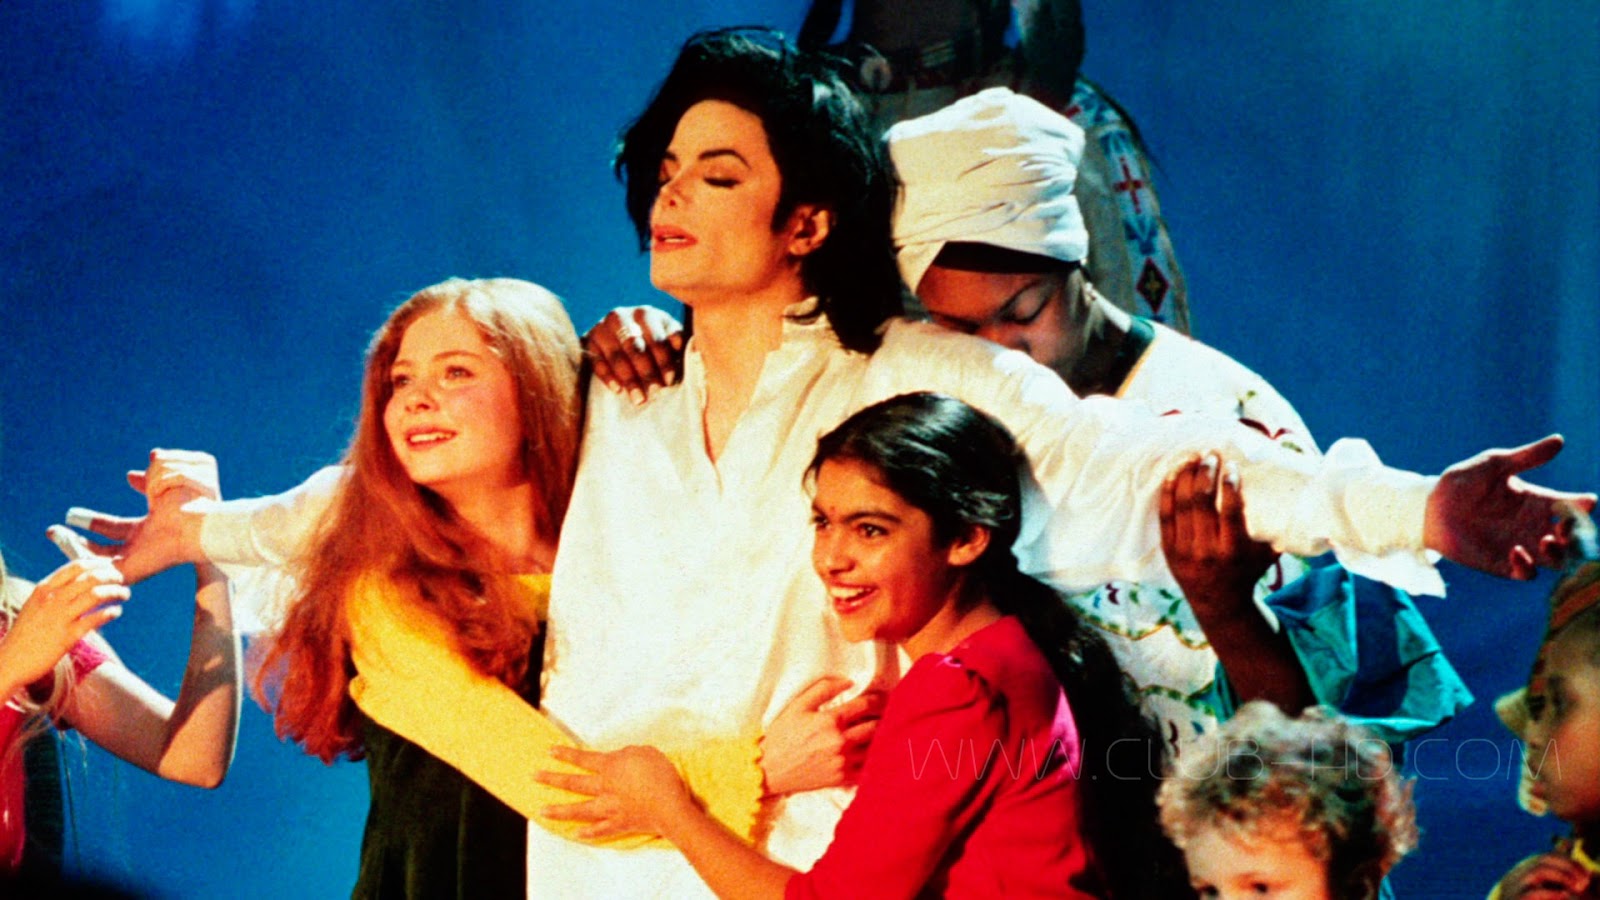 Michael-Jackson-The-Life-of-an-Icon-CAPTURA-11.jpg